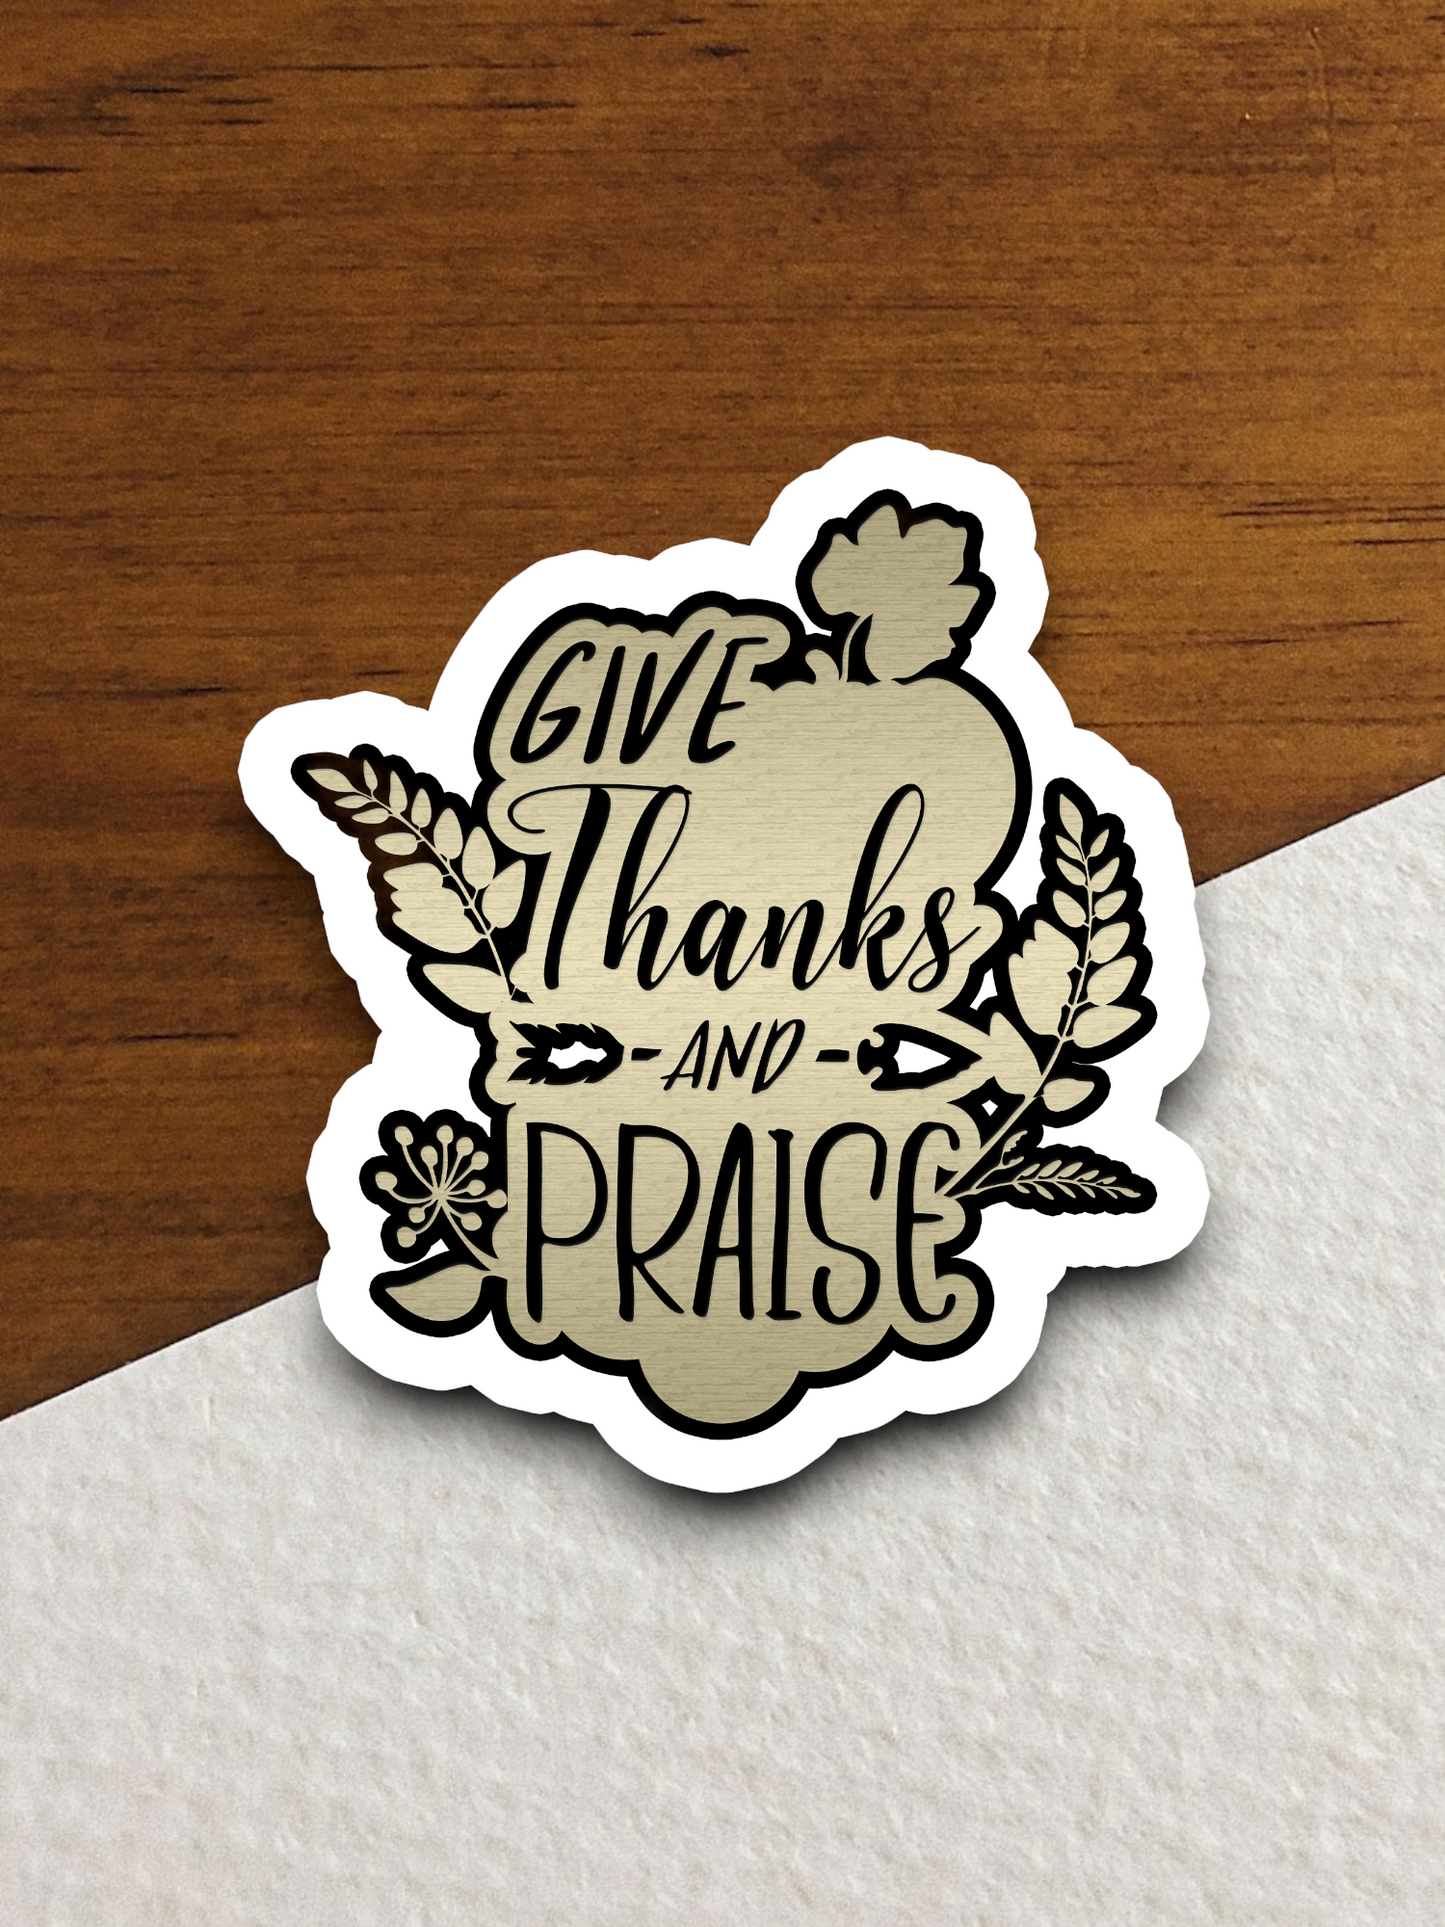 Give Thanks and Praise - Faith Sticker